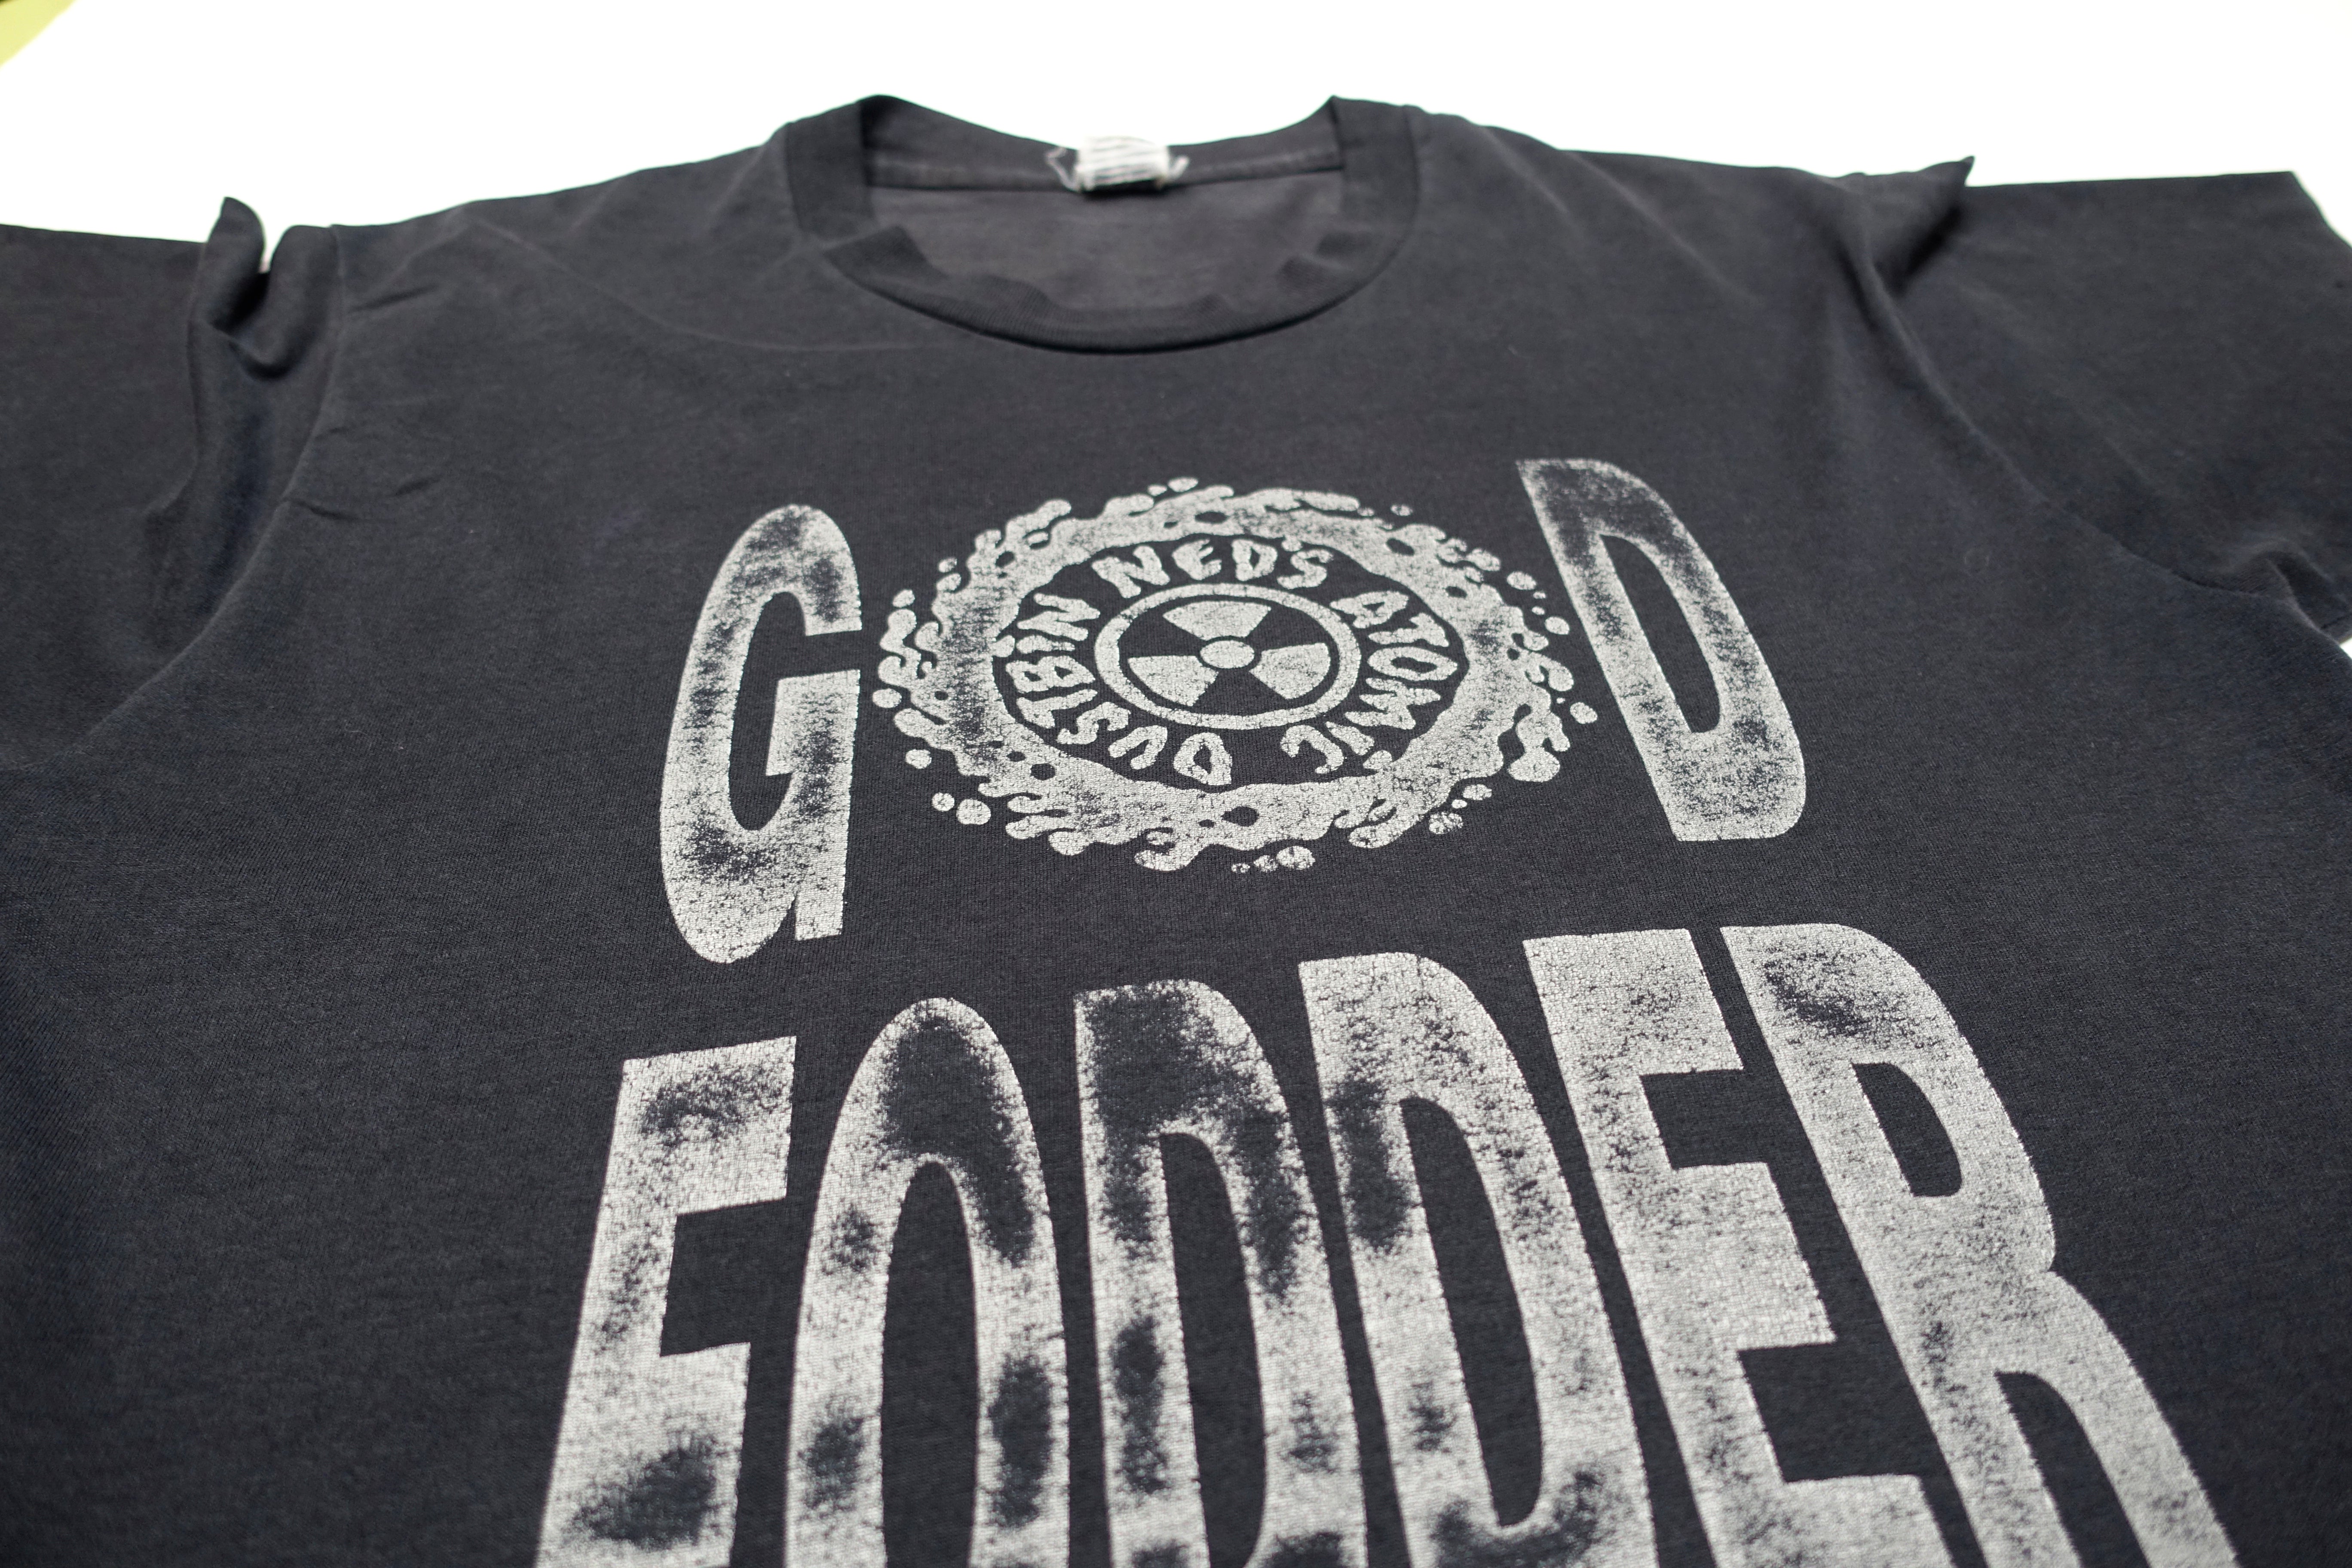 Ned's Atomic Dustbin - God Fodder 1992 Tour Shirt Size Large